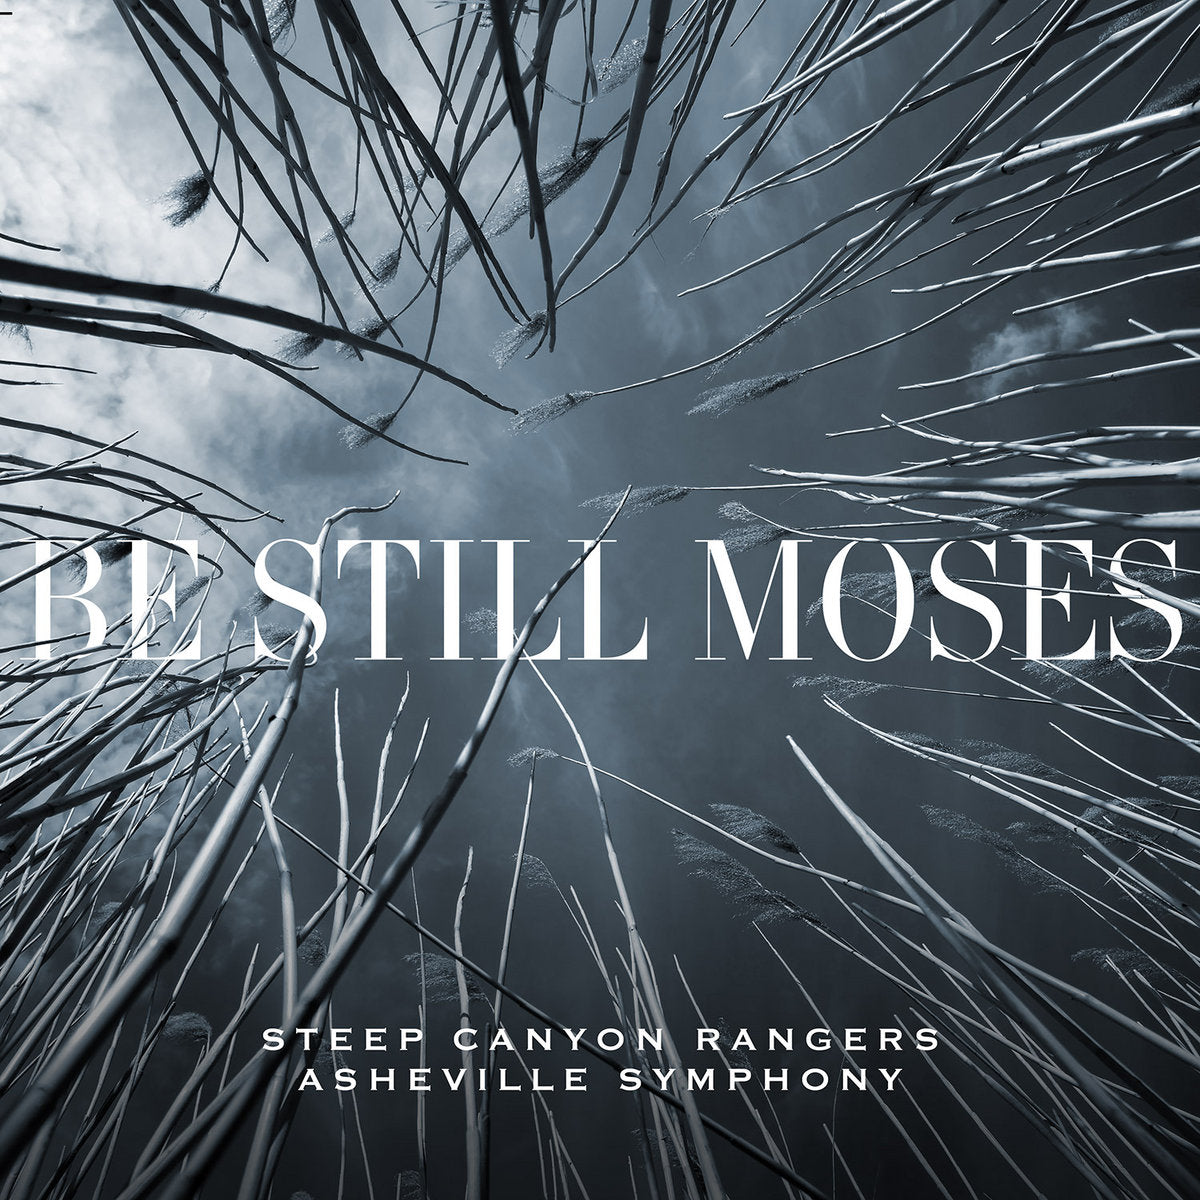 Steep Canyon Rangers & Asheville Symphony - Be Still Moses